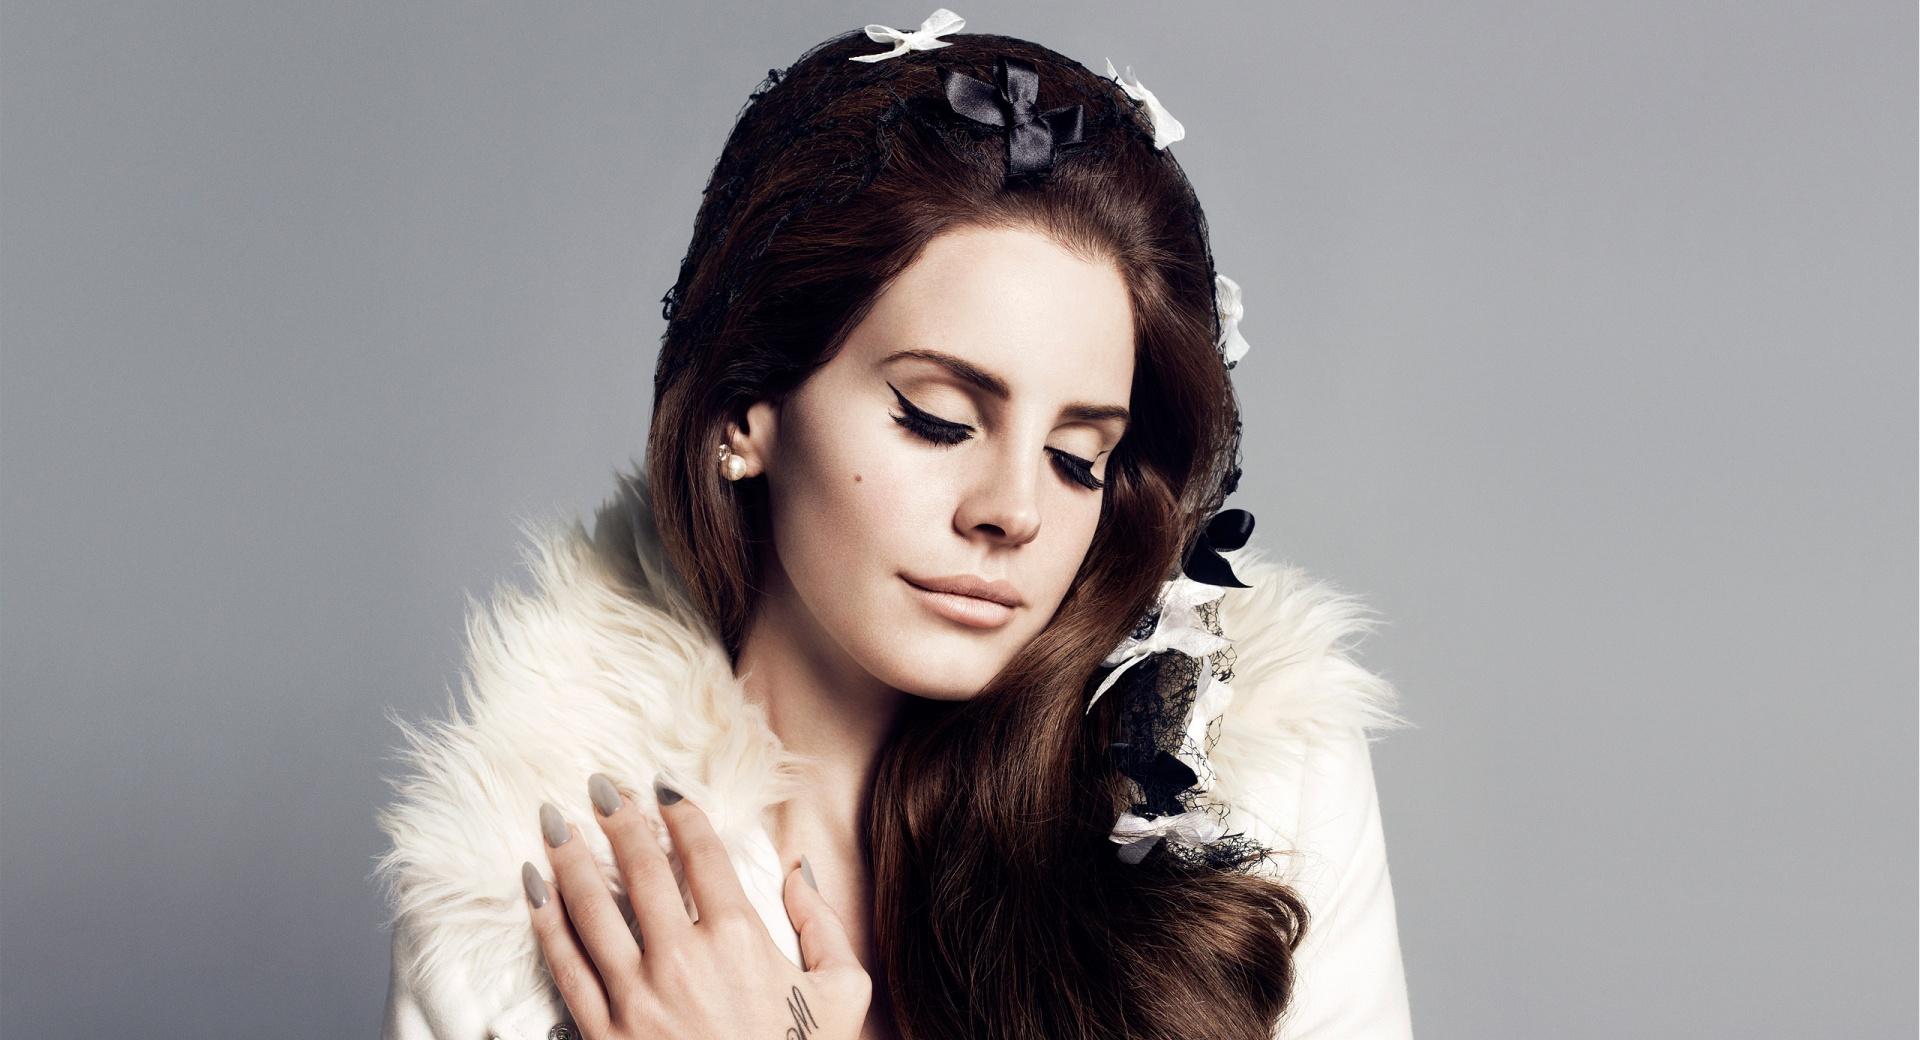 Lana Del Rey Portrait wallpapers HD quality